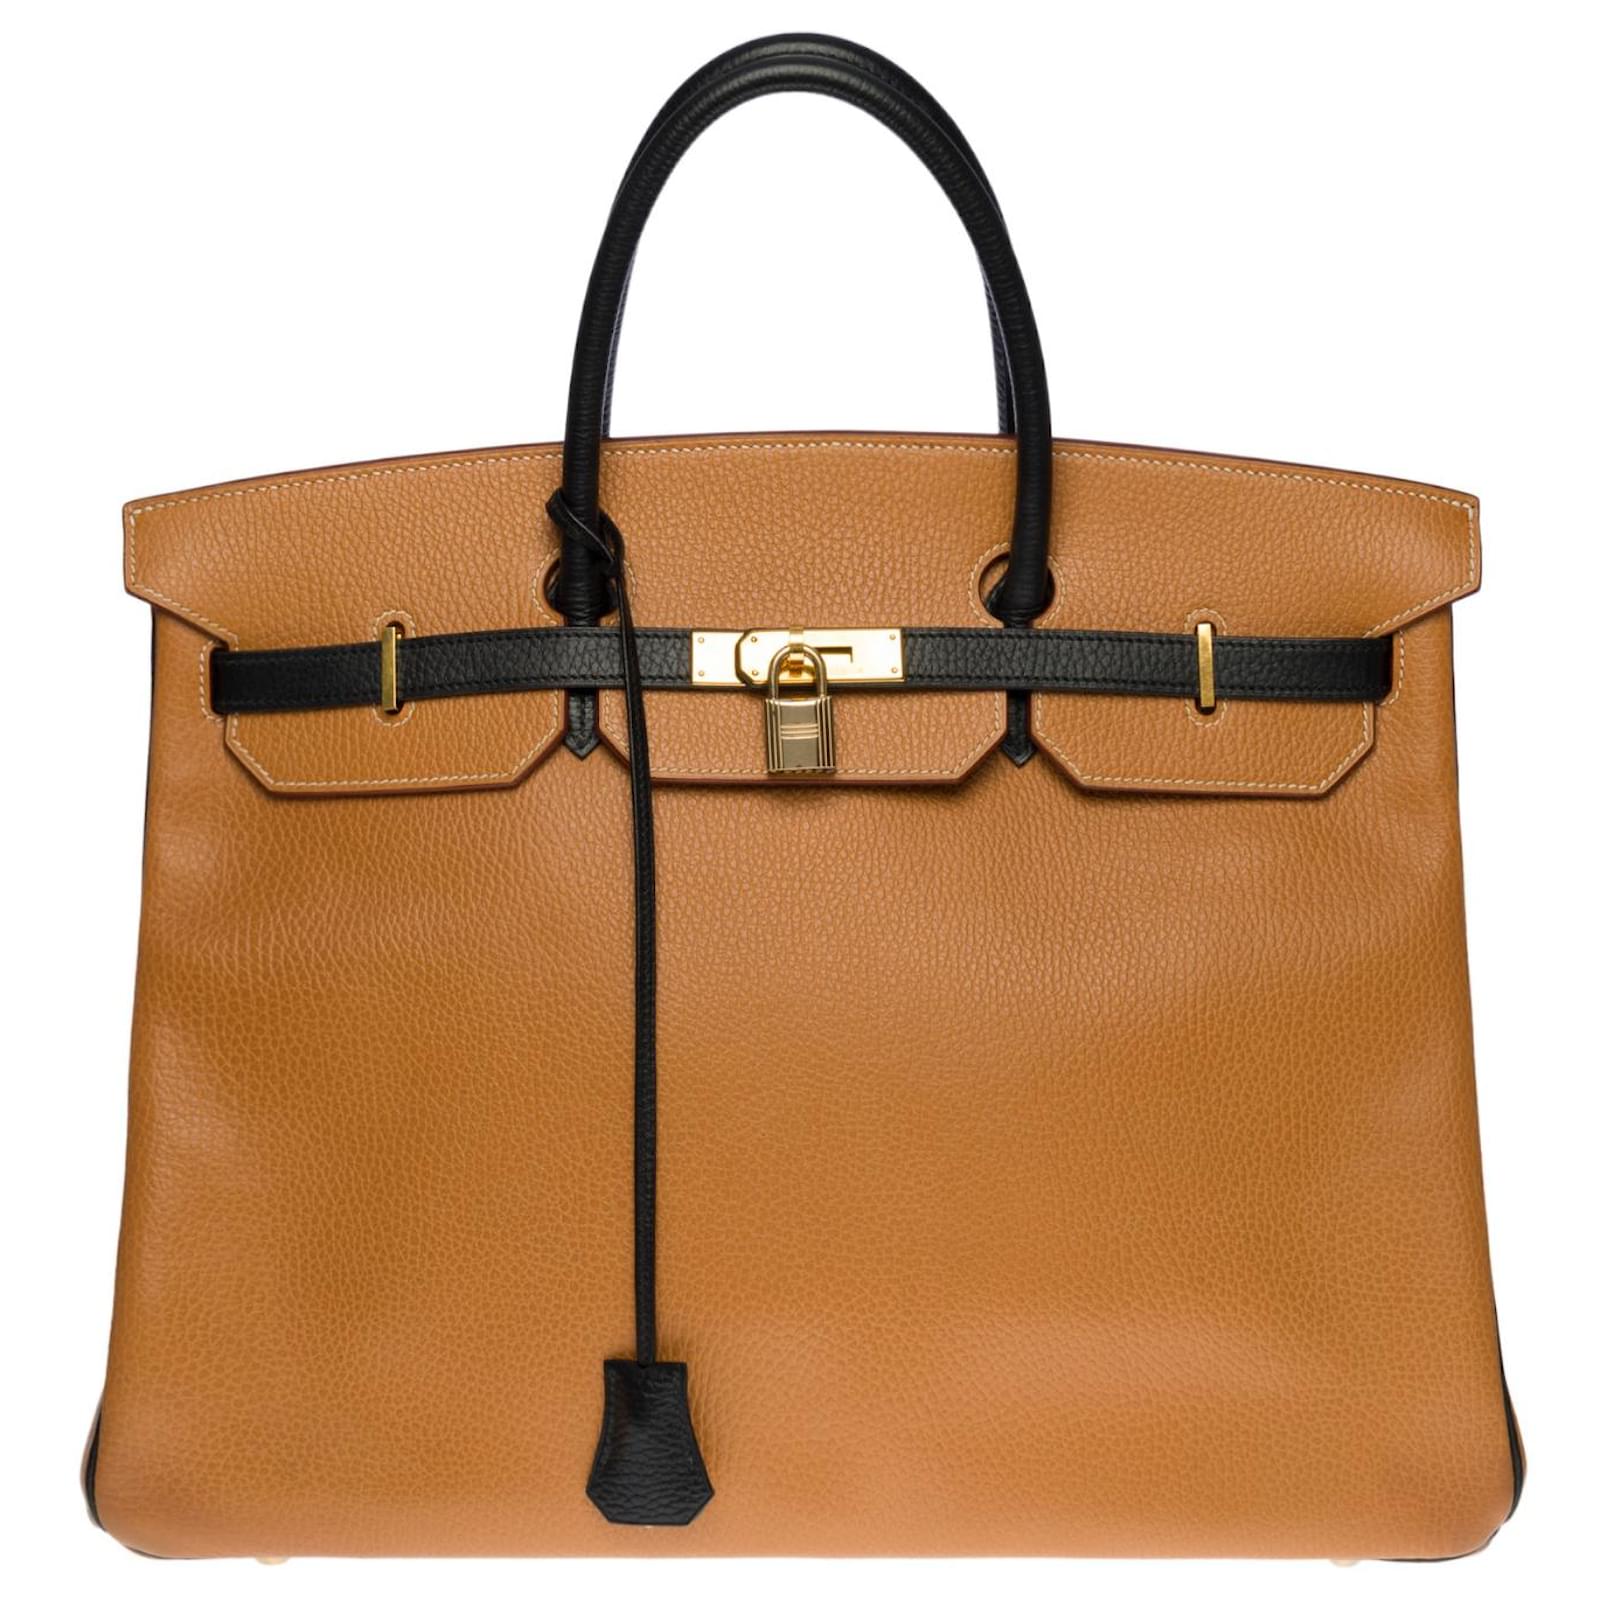 Hermès Extremely rare Hermes Birkin handbag 40 cm in two-tone Gold